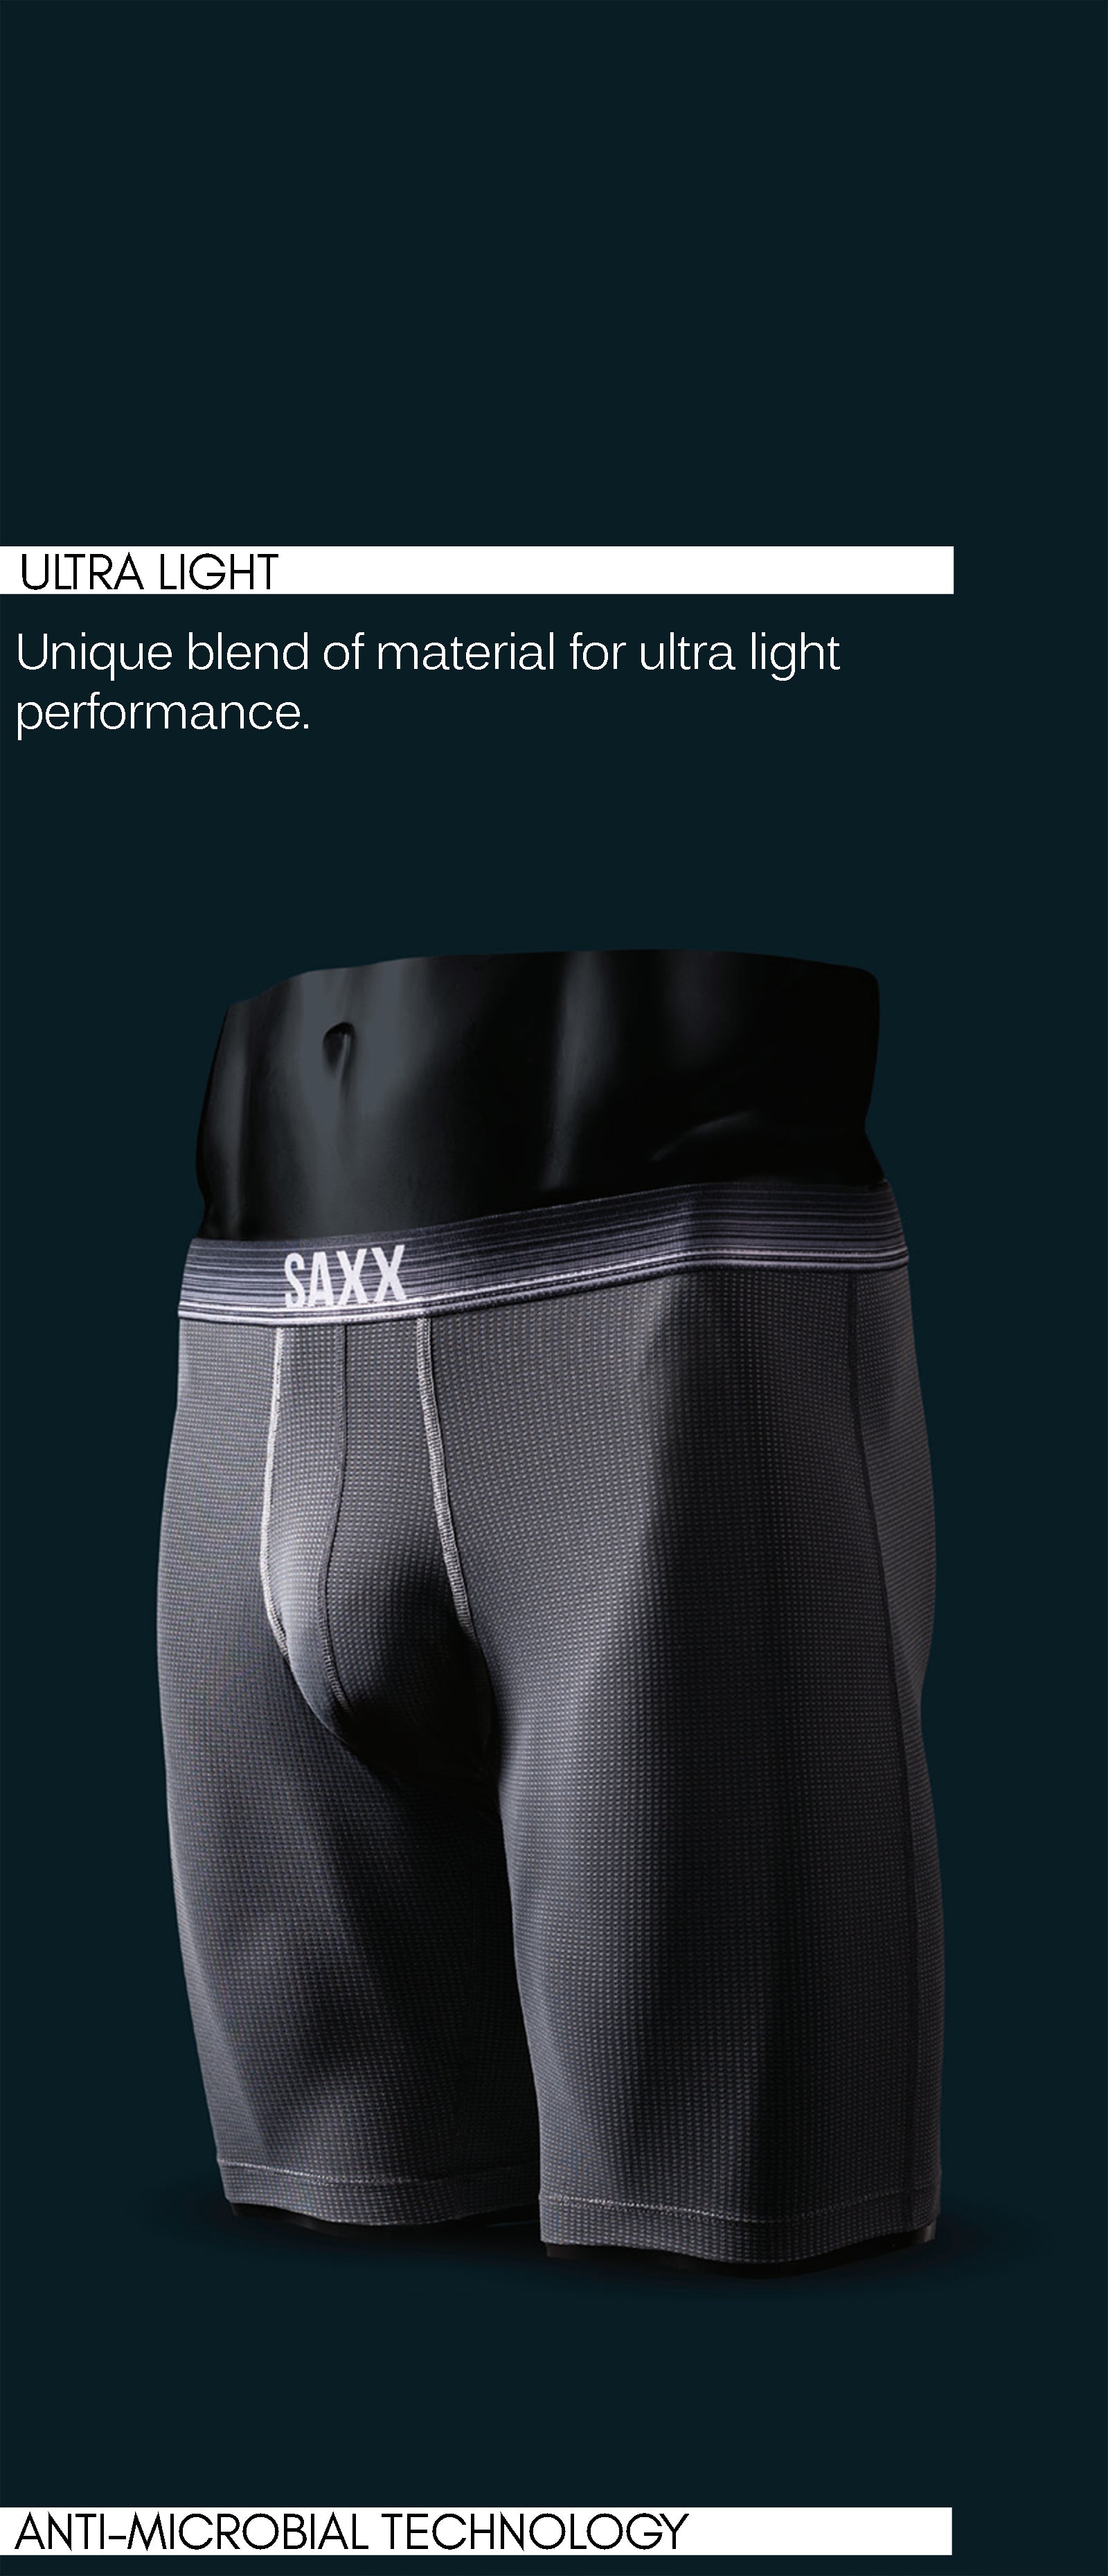 Saxx Fall 2017 The Ultimate Travel & Adventure Underwear